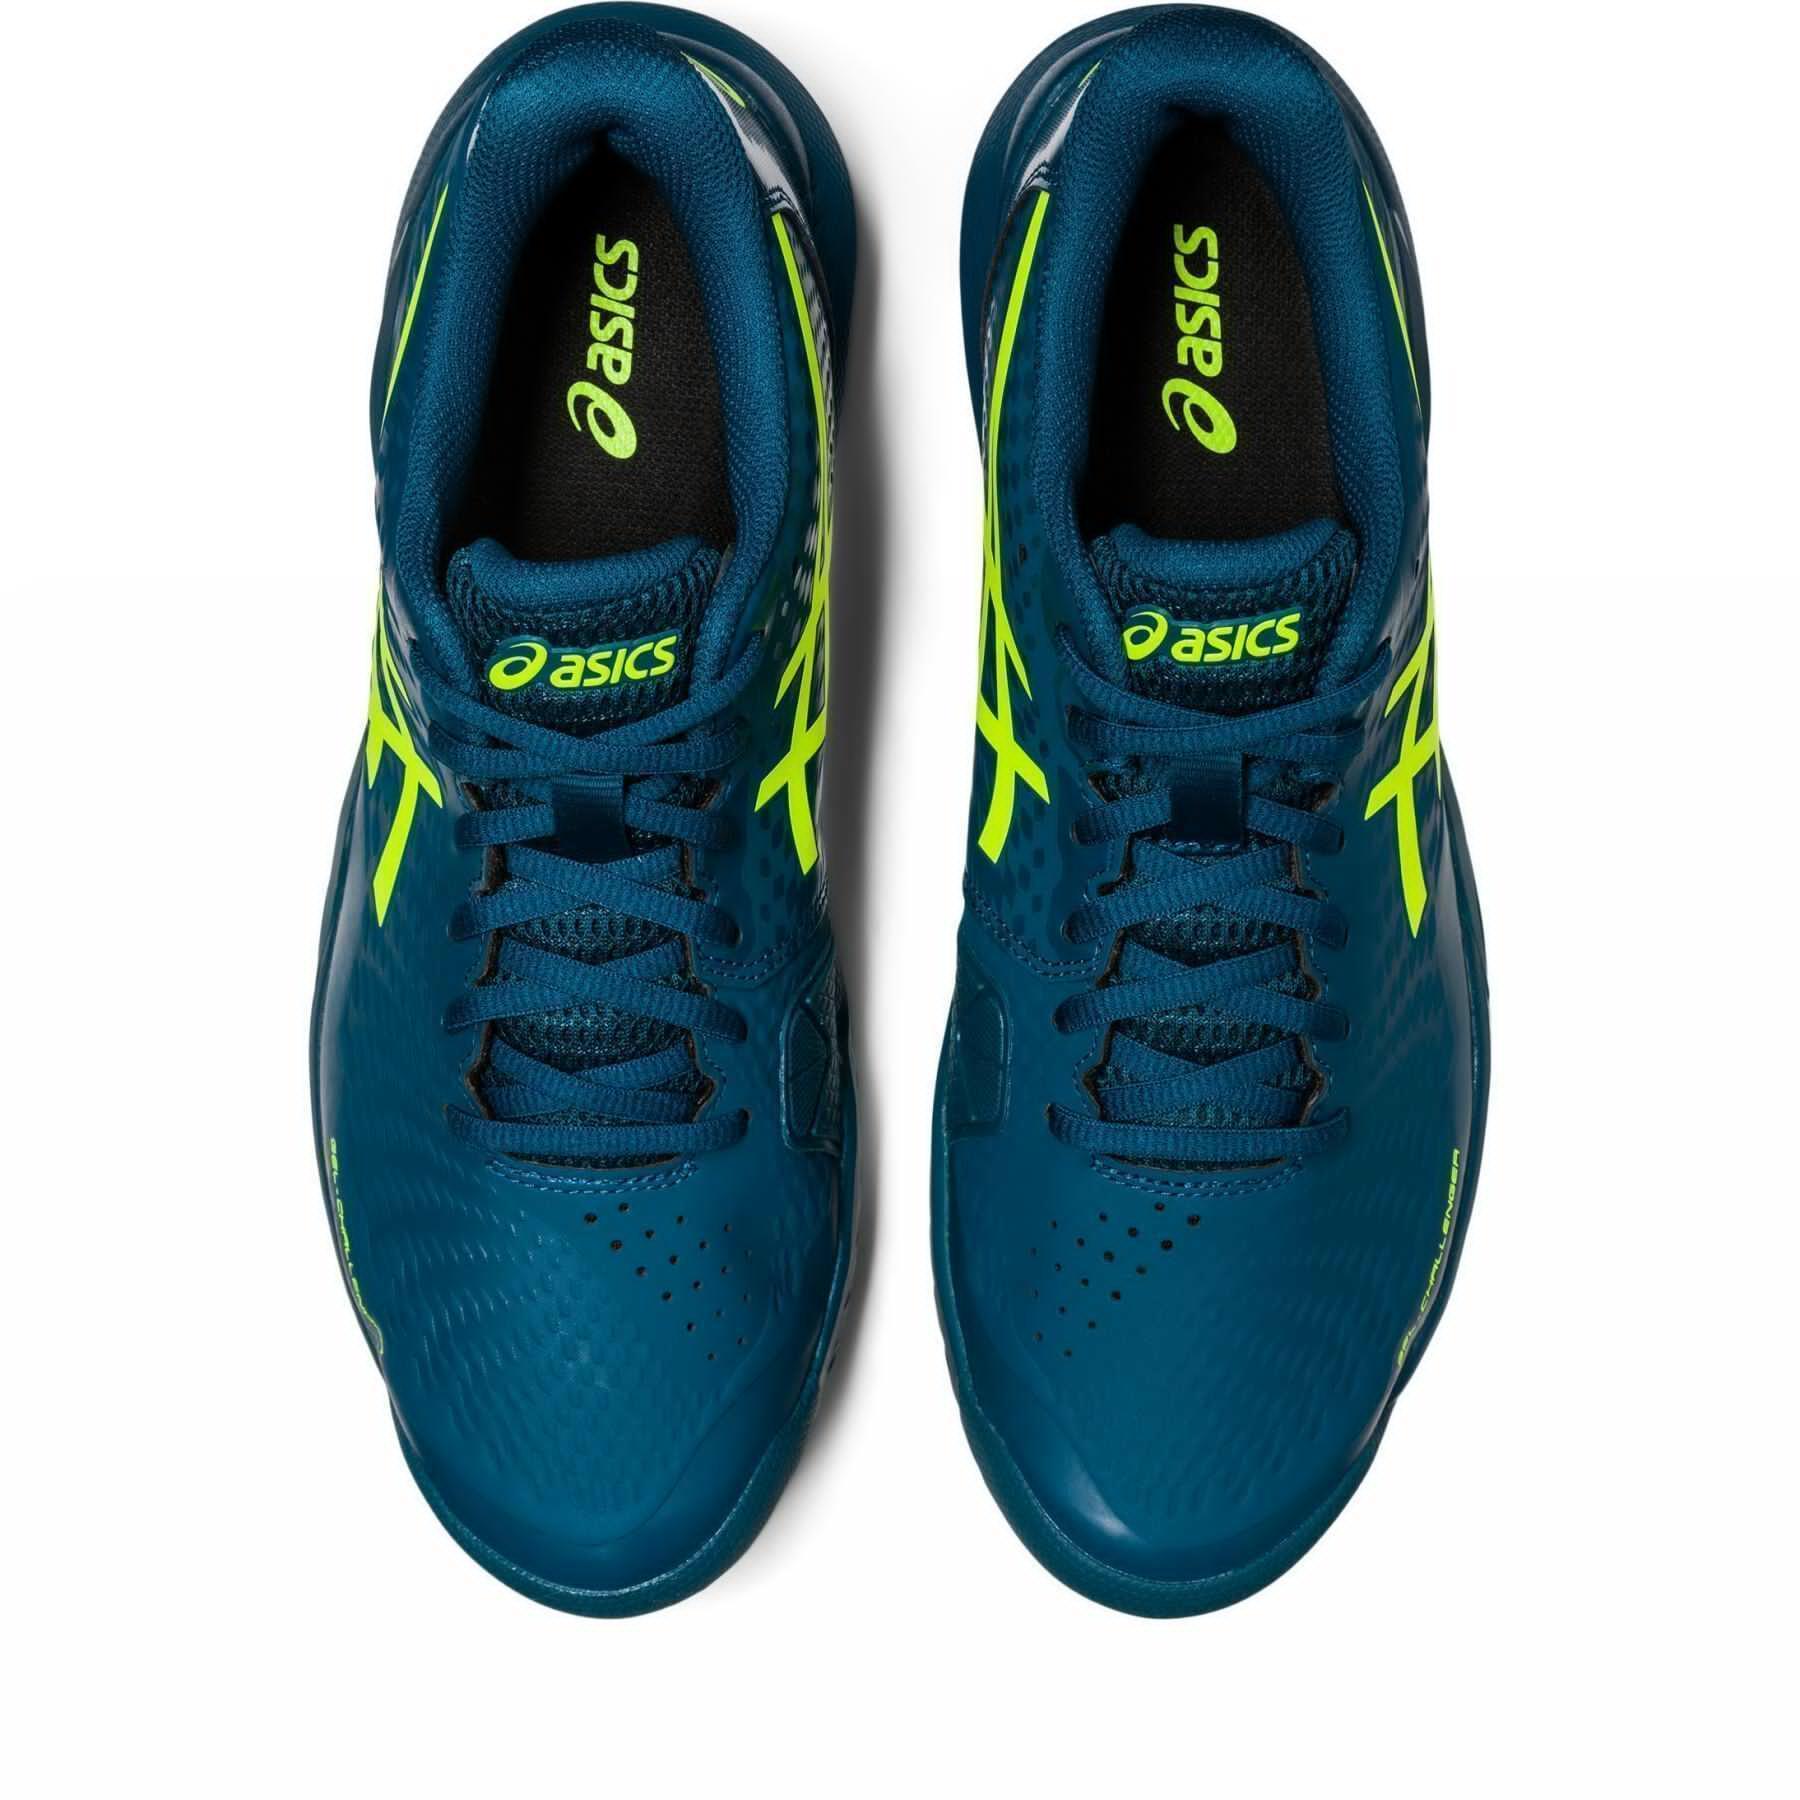 Tennis shoes Asics Gel-Challenger 14